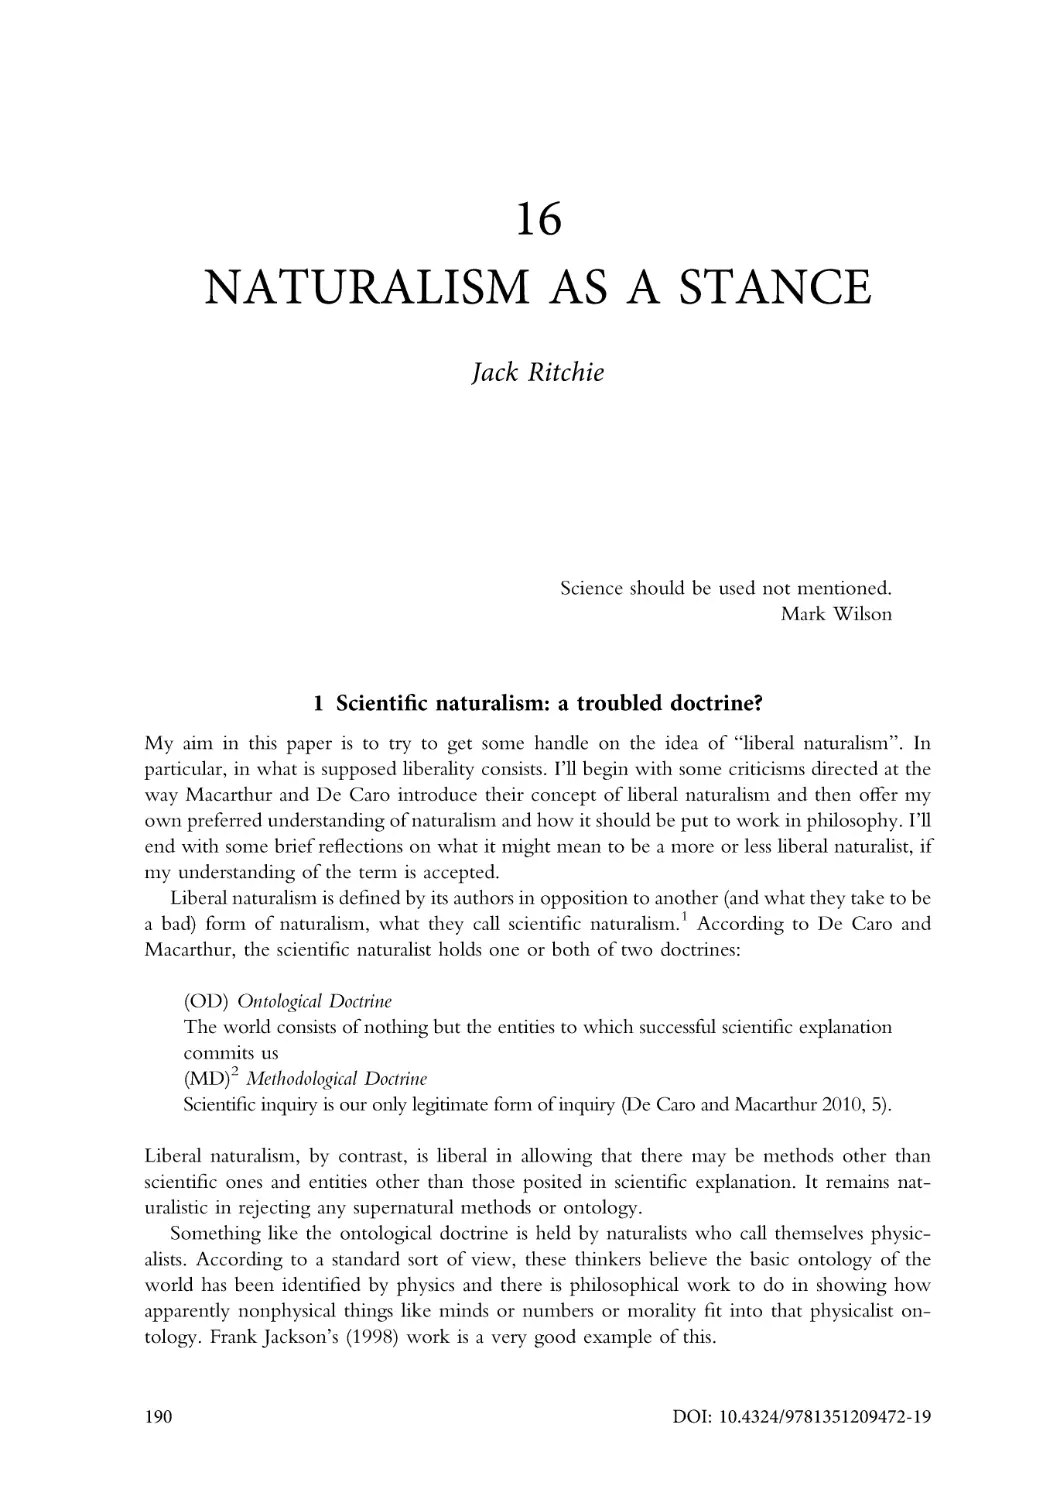 16. Naturalism as a stance
1. Scientific naturalism